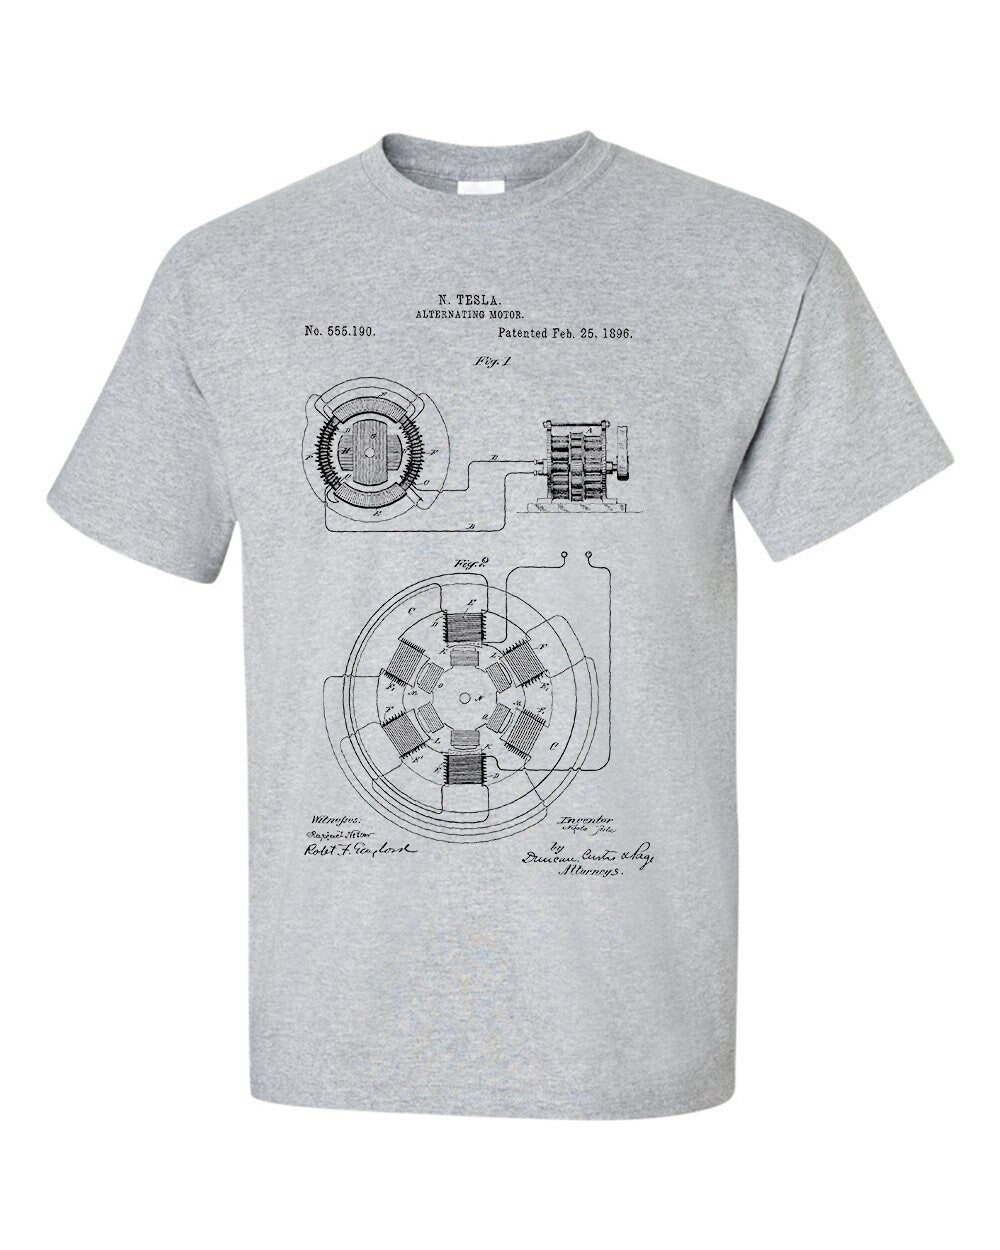 Nicola Tesla Alternating Motor Patent Blueprint T-Shirt